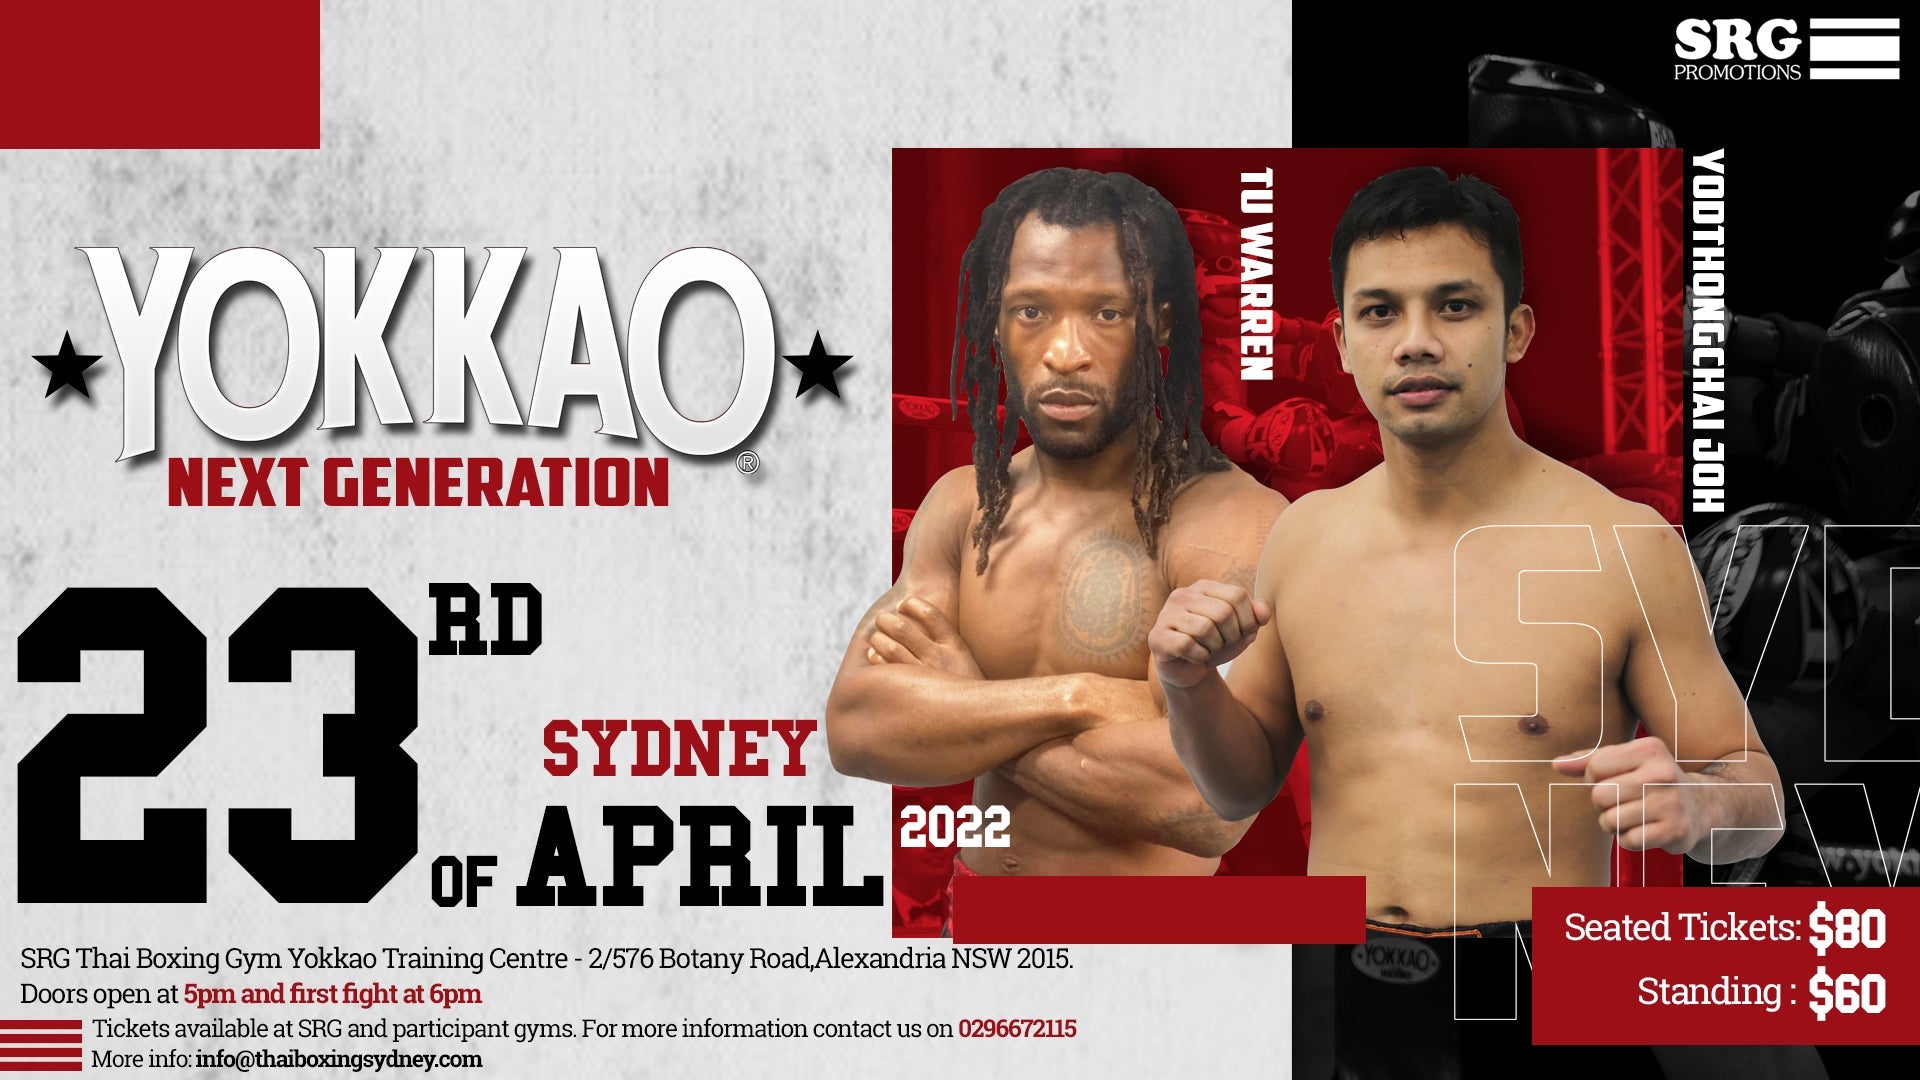 YOKKAO Next Generation Returns to Sydney on 23rd April